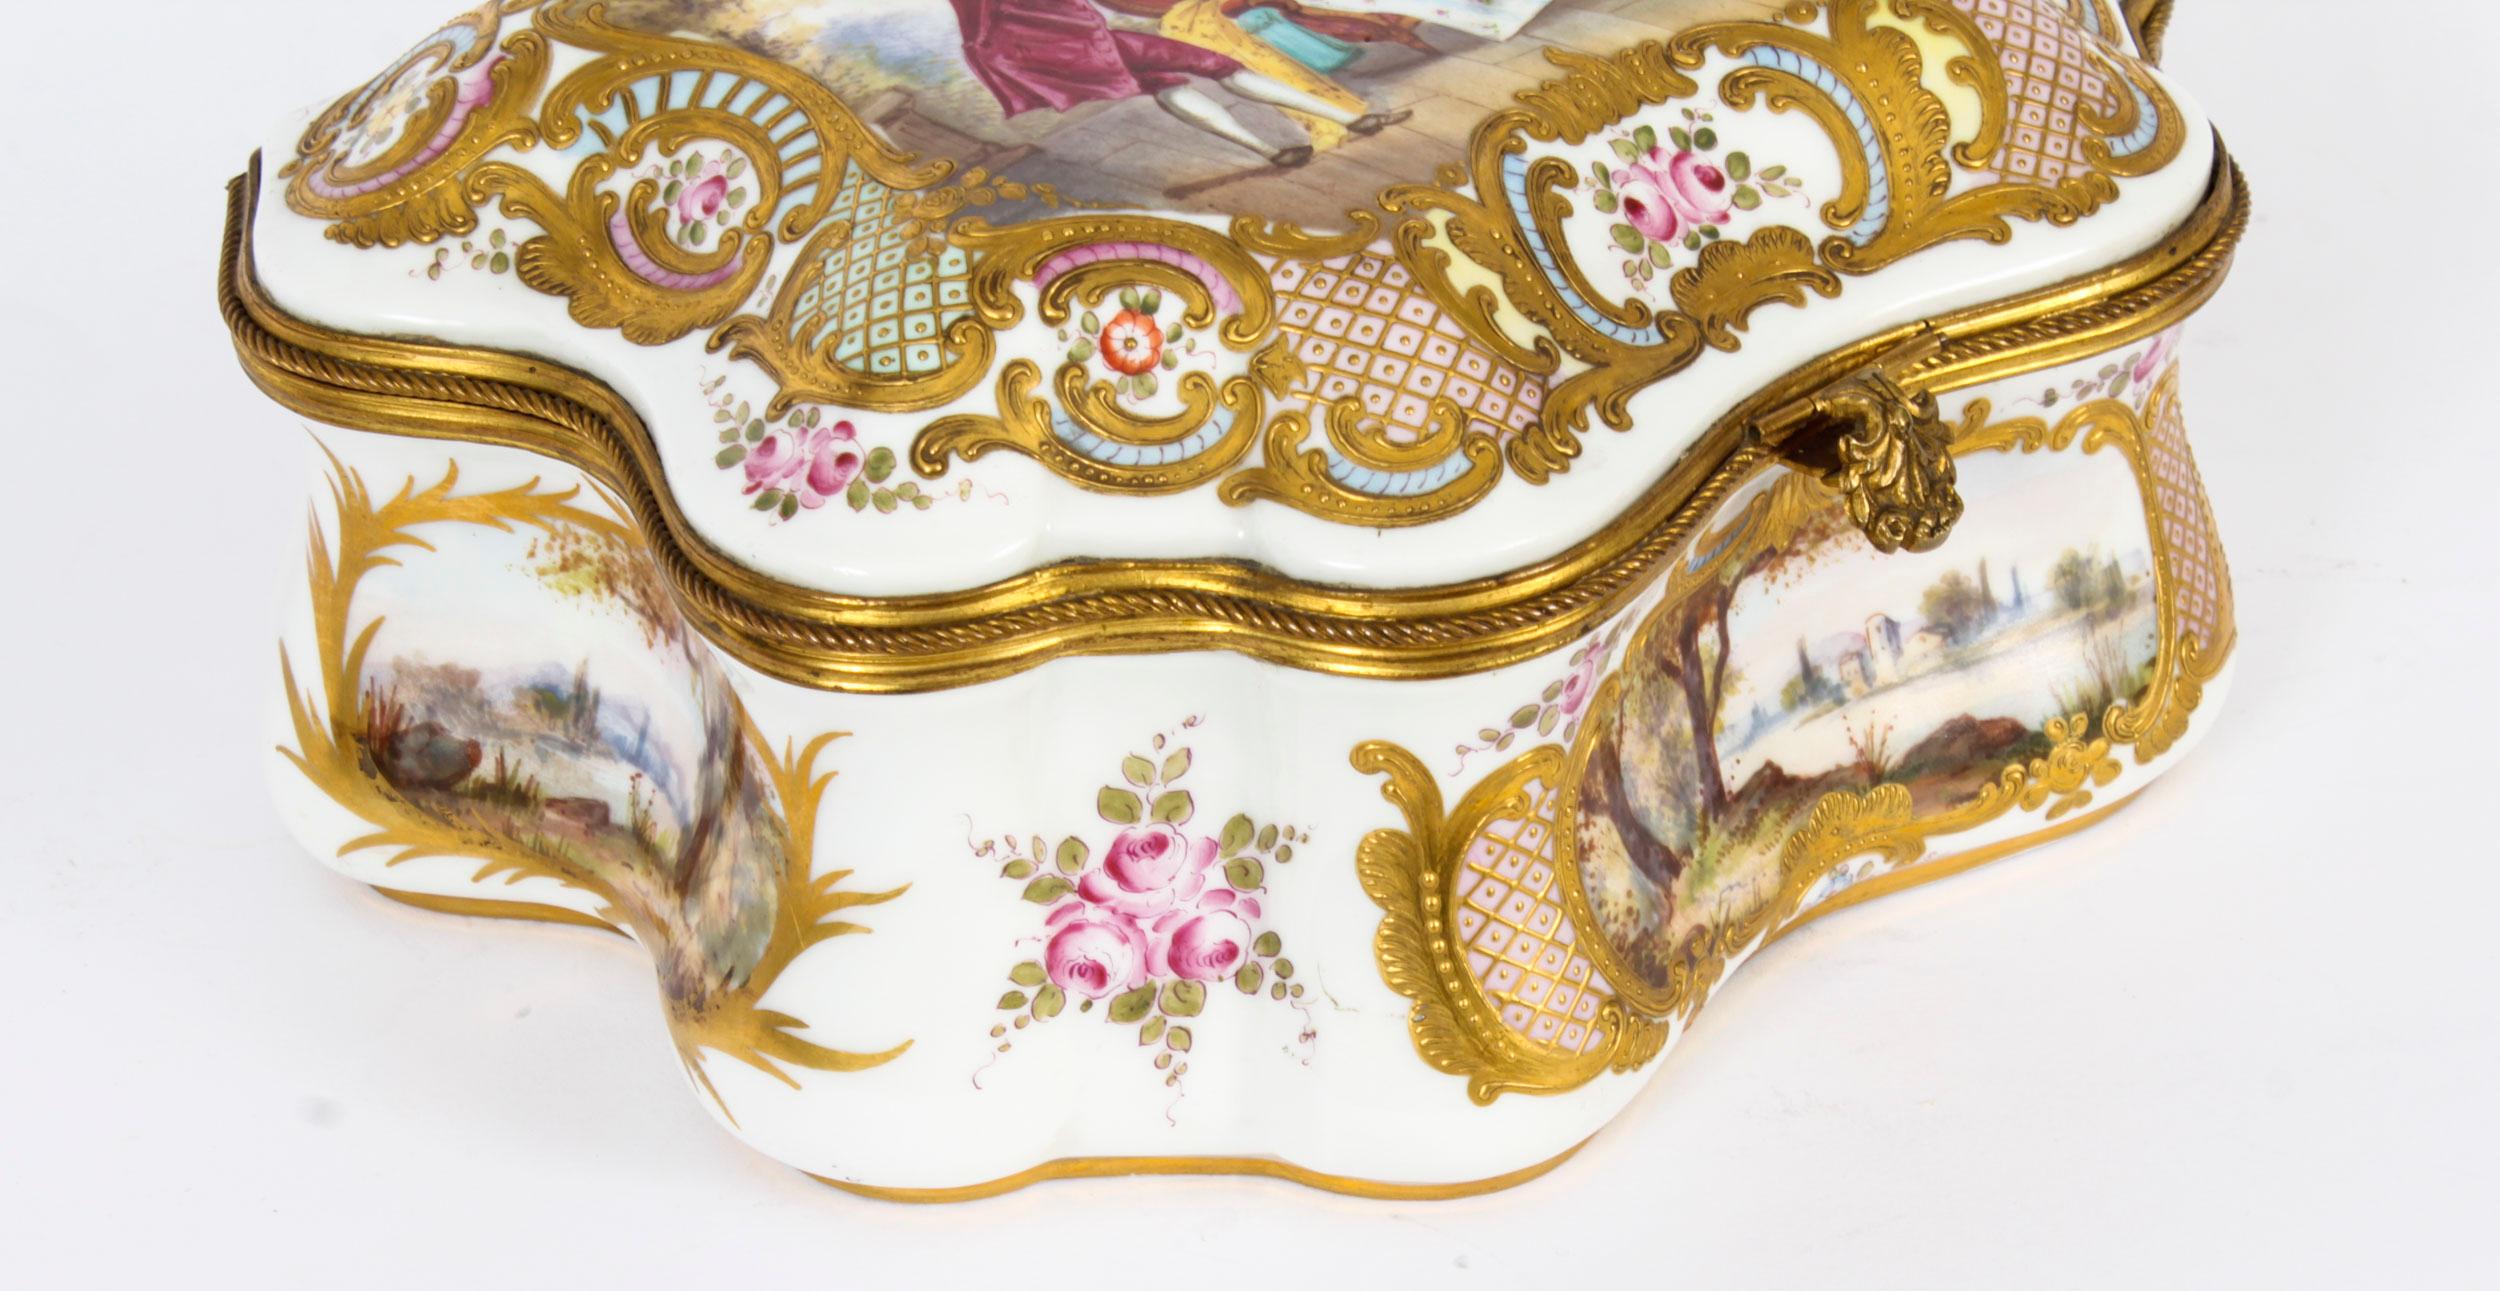 Antique Large French Sevres Porcelain Casket 19th Century For Sale 2